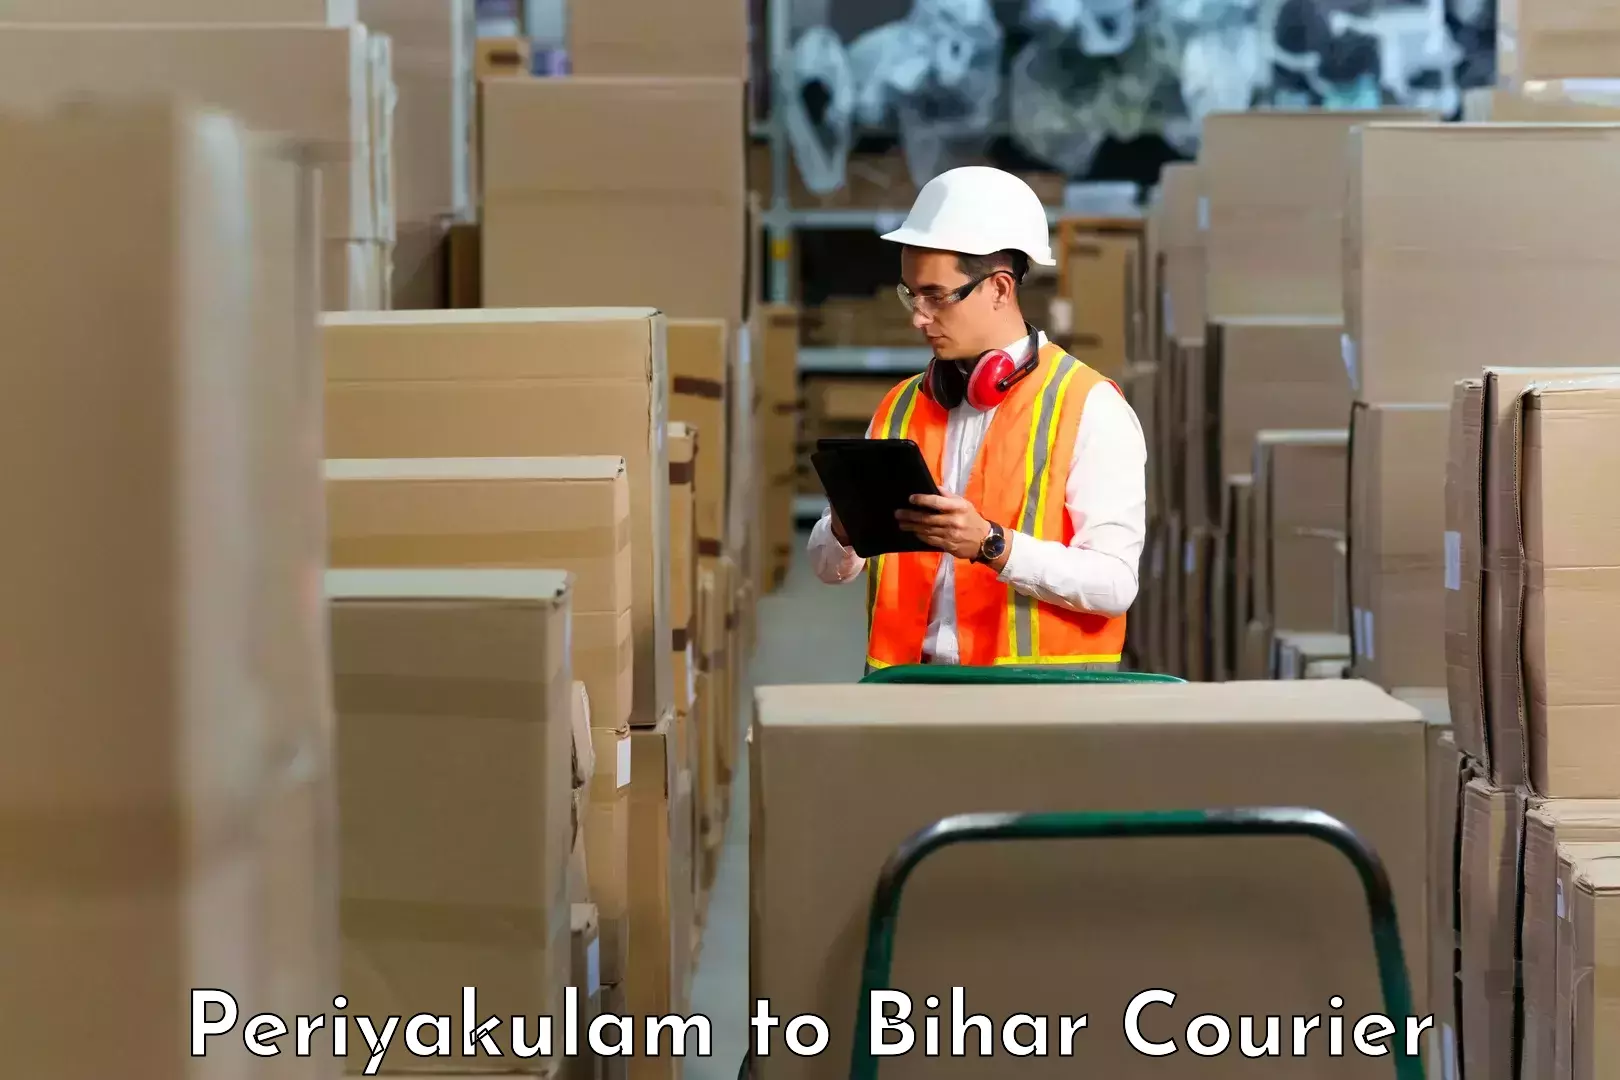 Courier service innovation Periyakulam to Bankipore